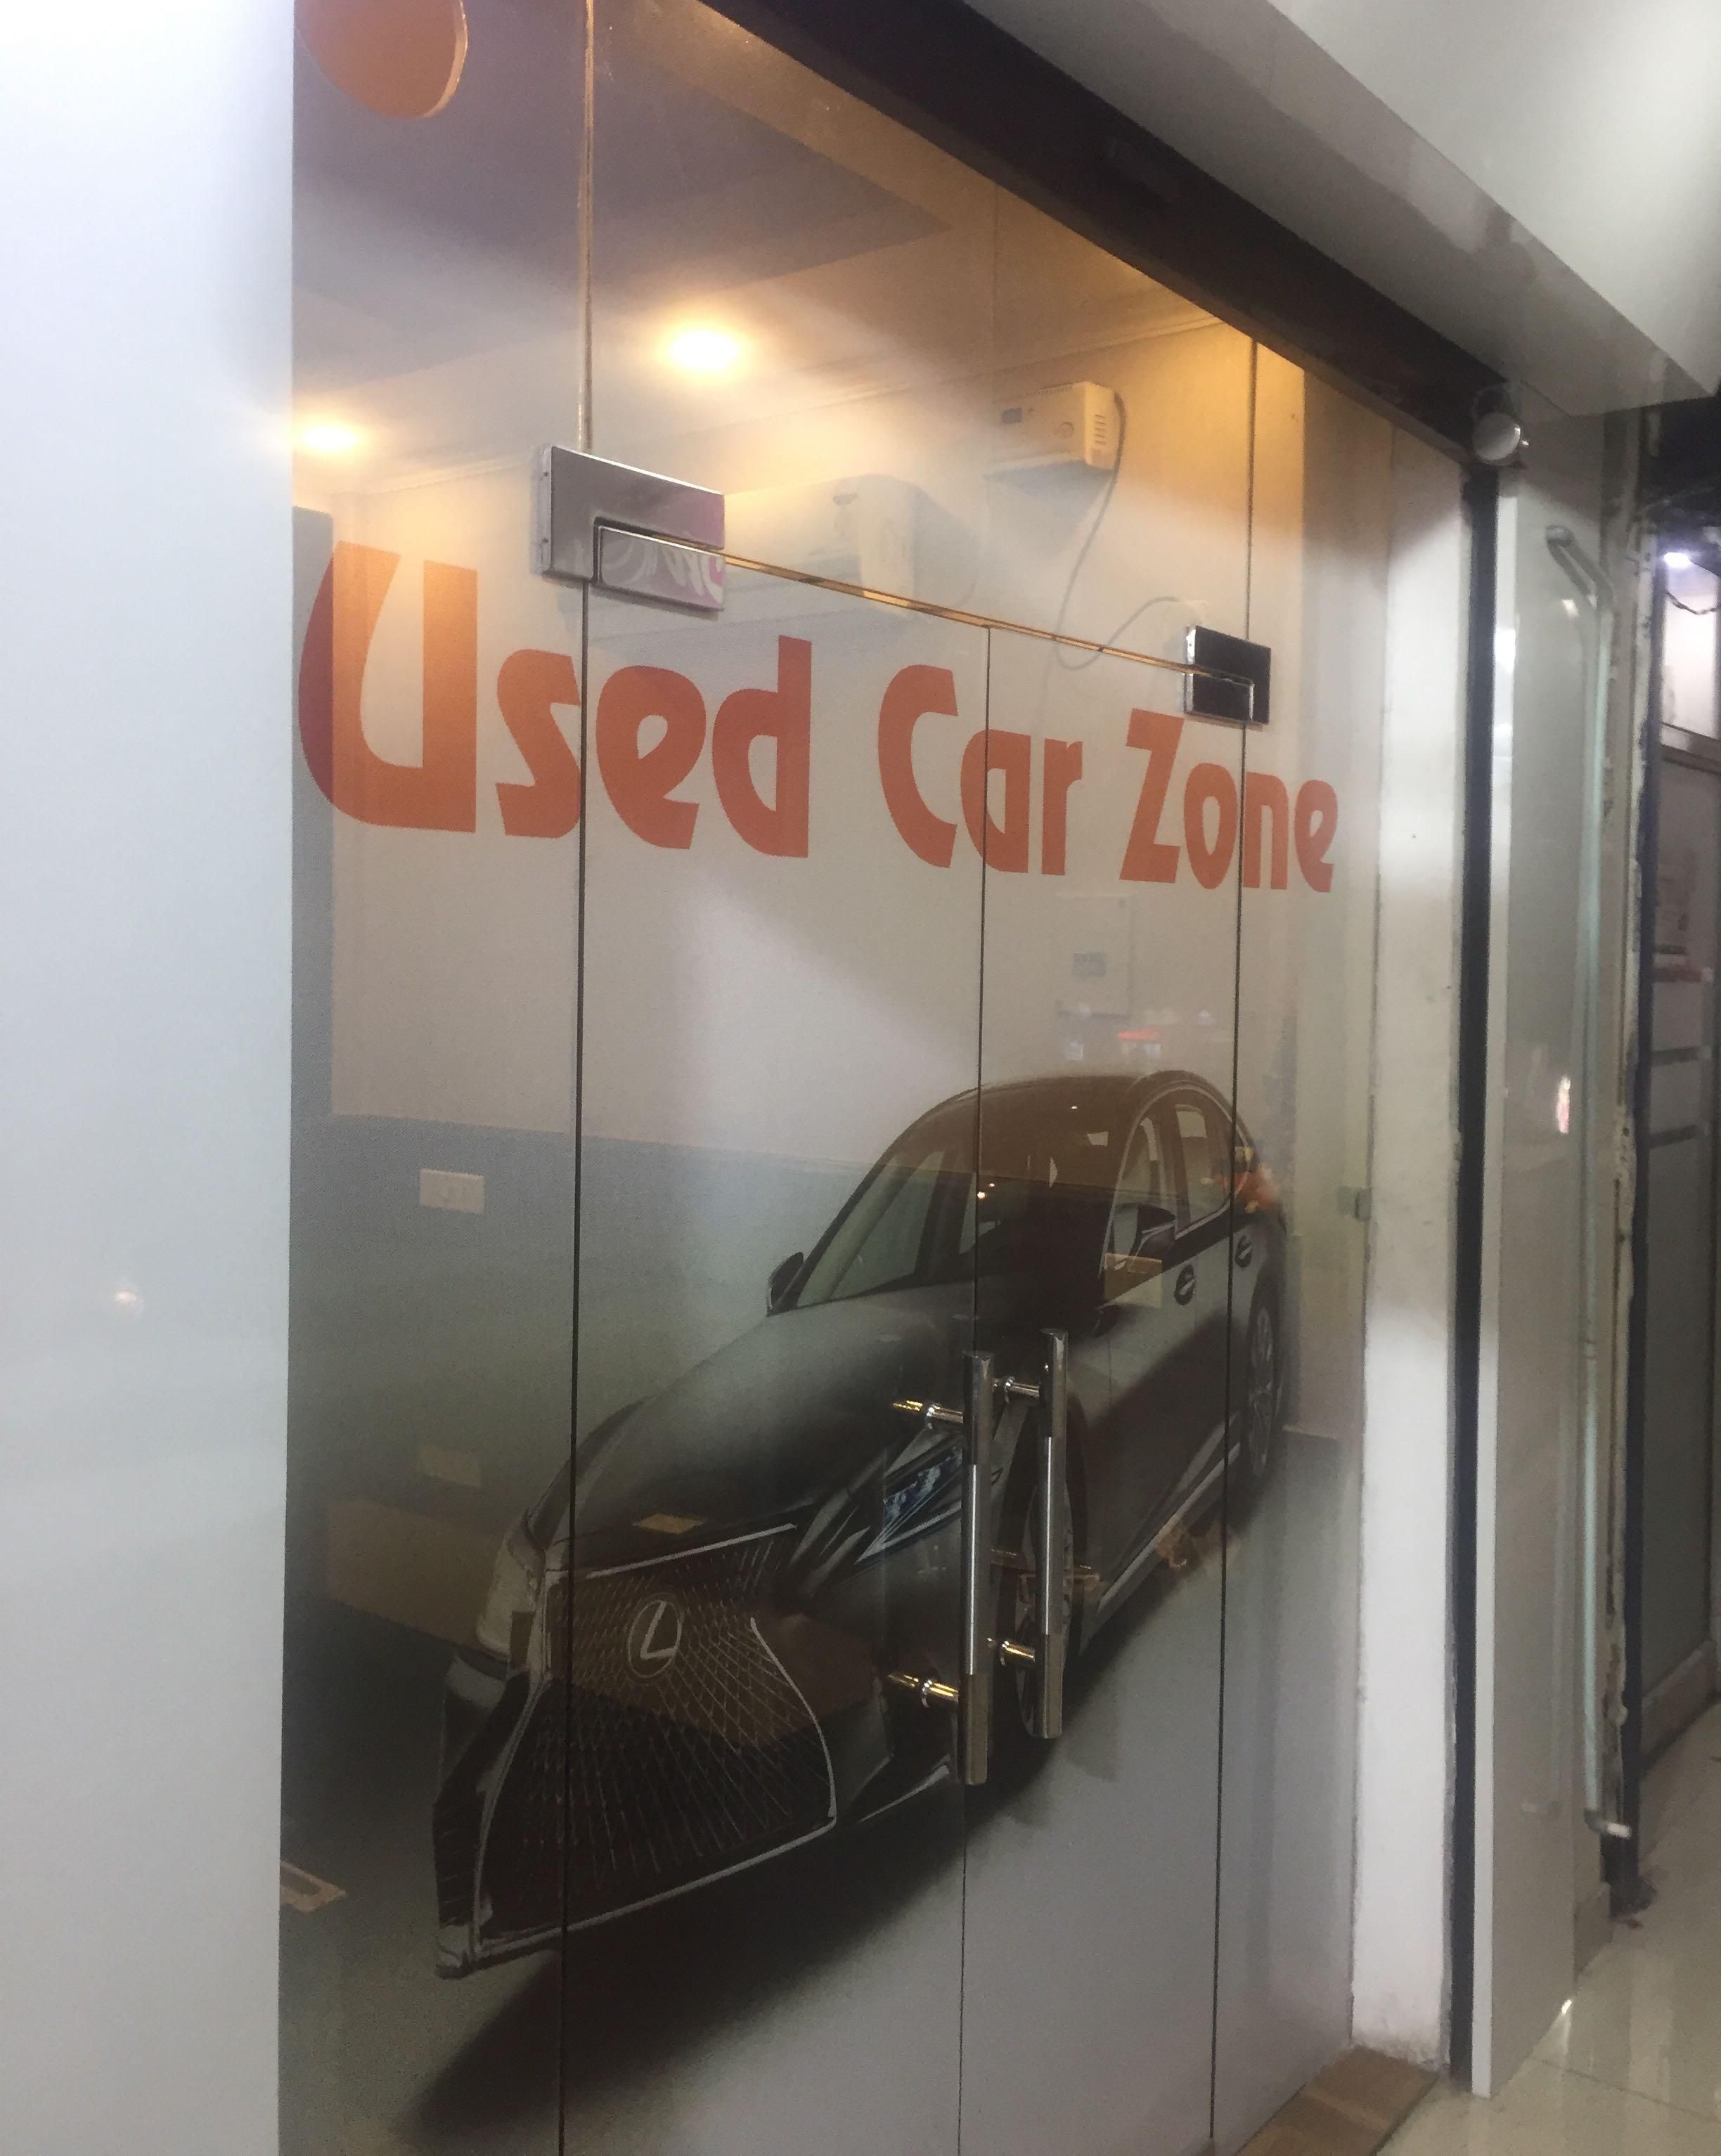 Used Car Zone